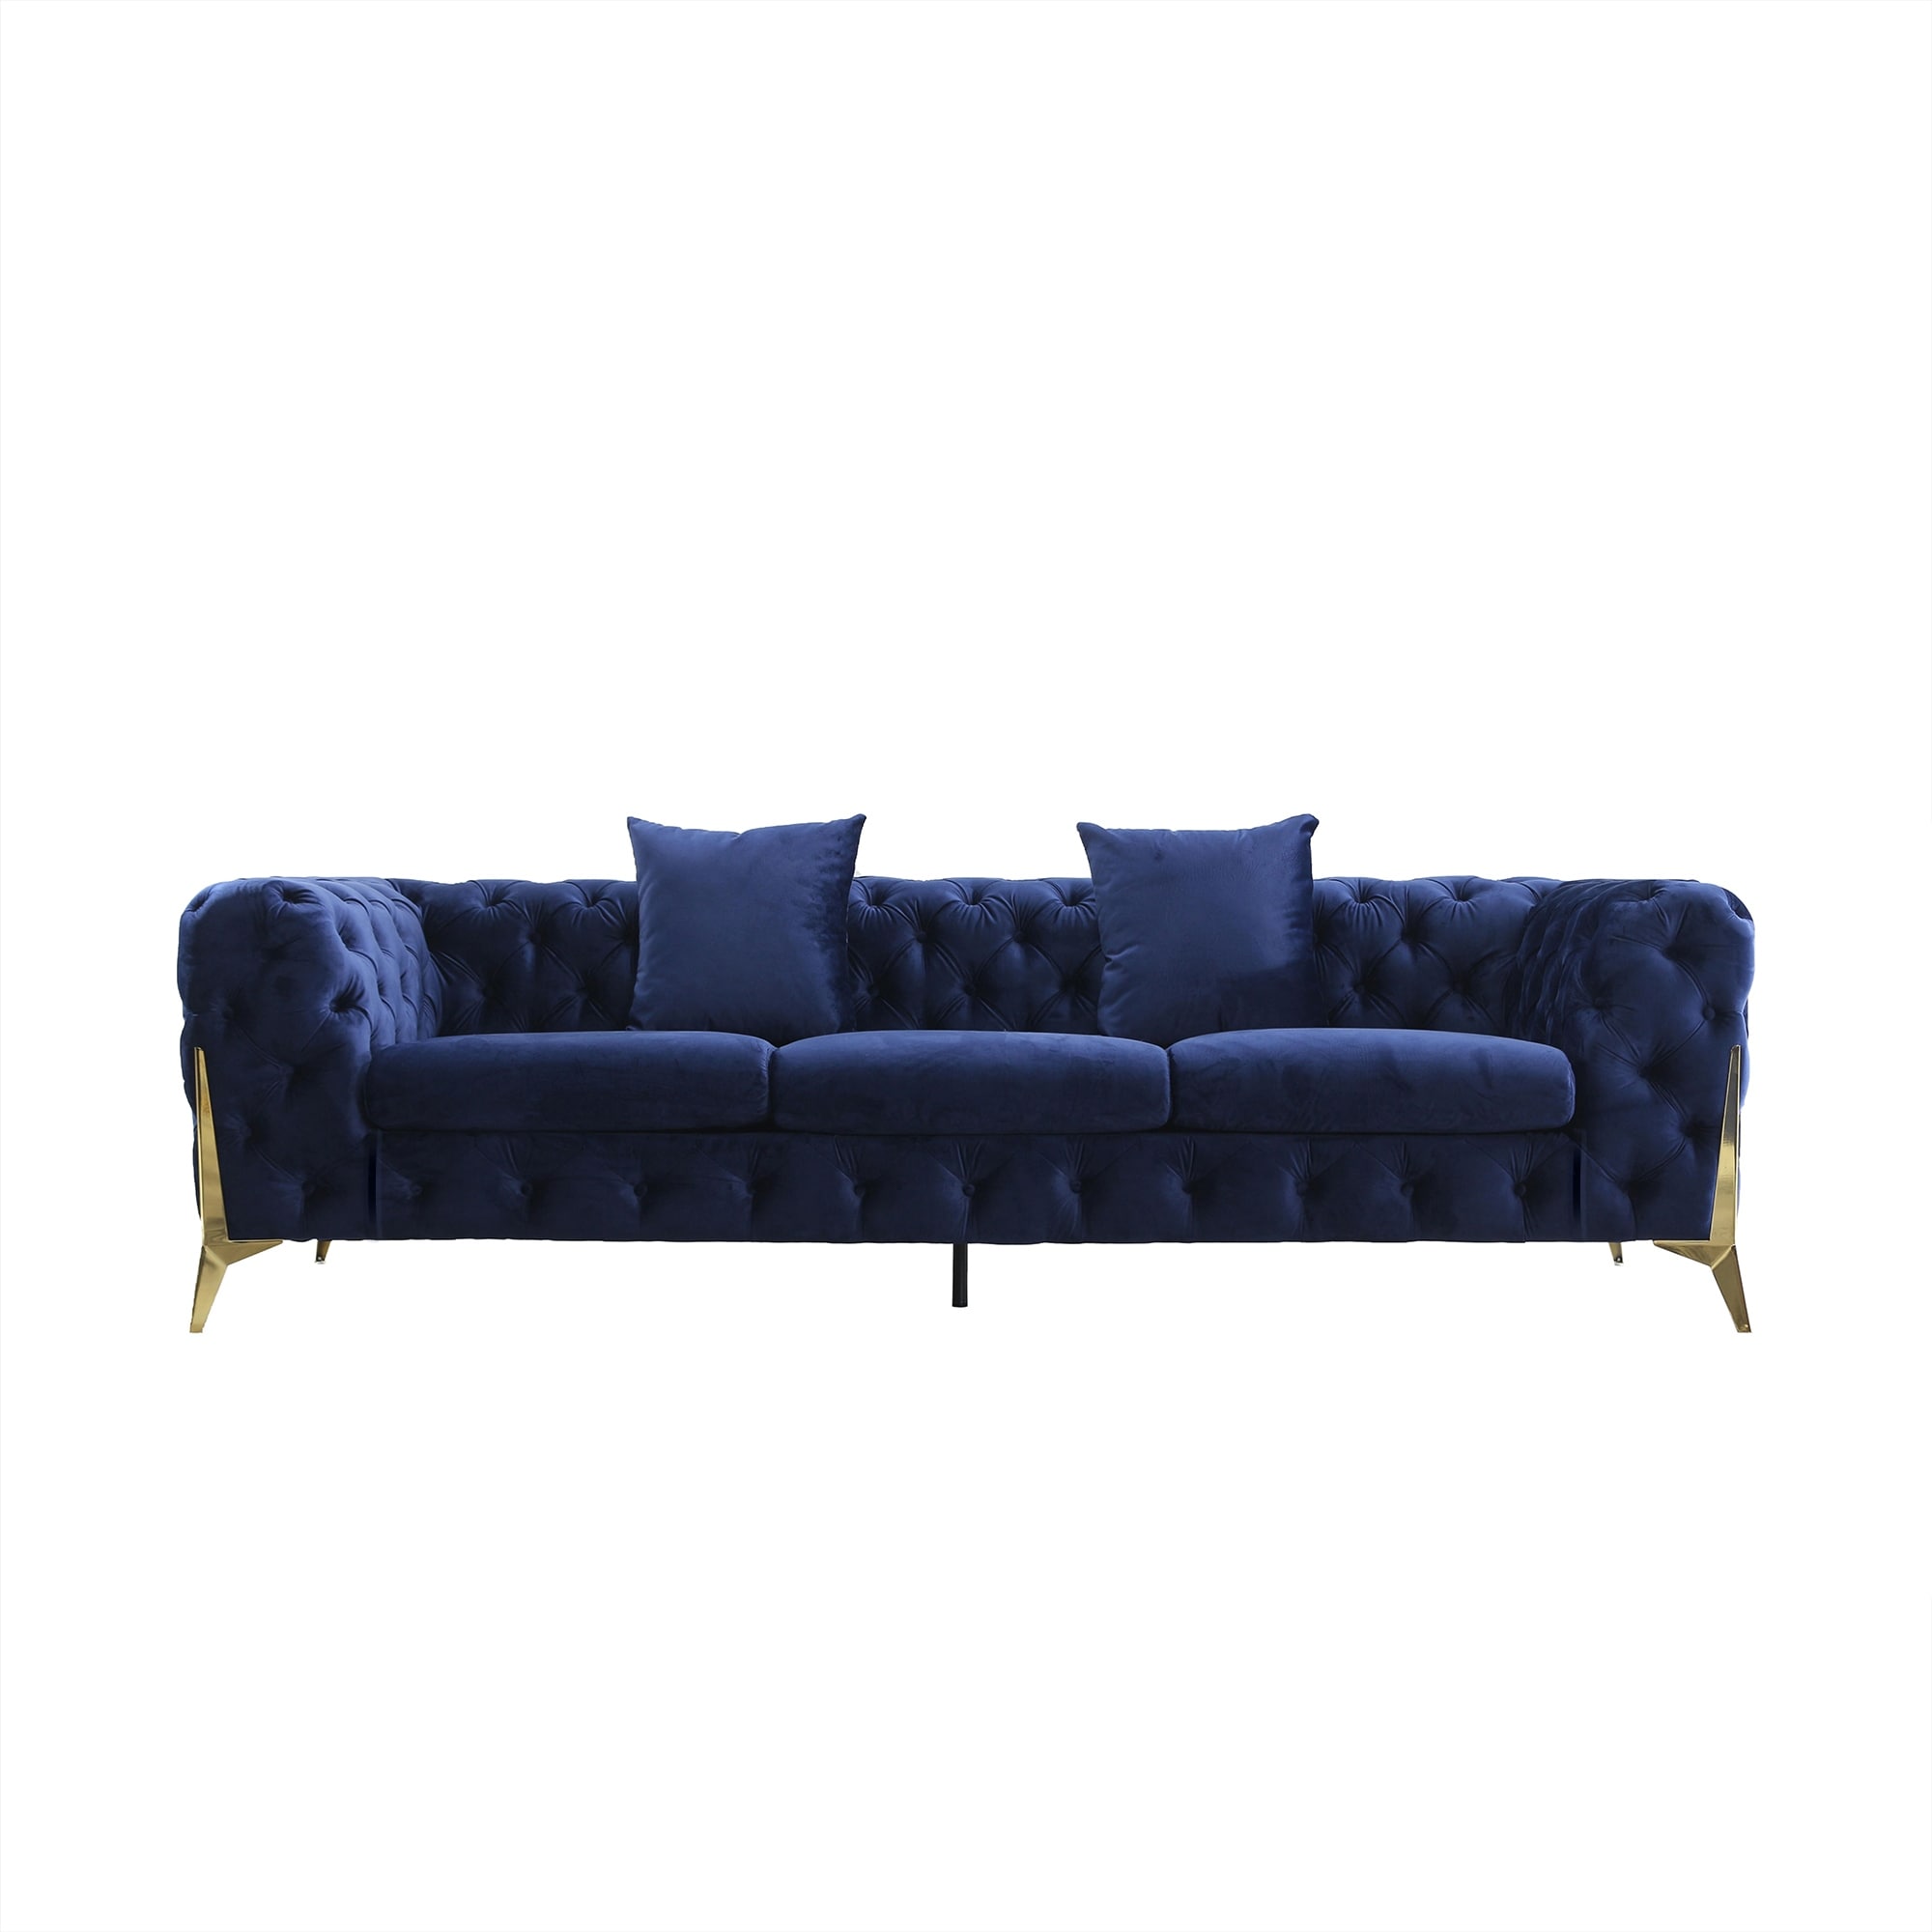 3-seater Sofa Velvet Upholstered Modern Living Room Tuxedo Arms Sofa With Buttoned Tufted Backrest And Golden Metal Legs